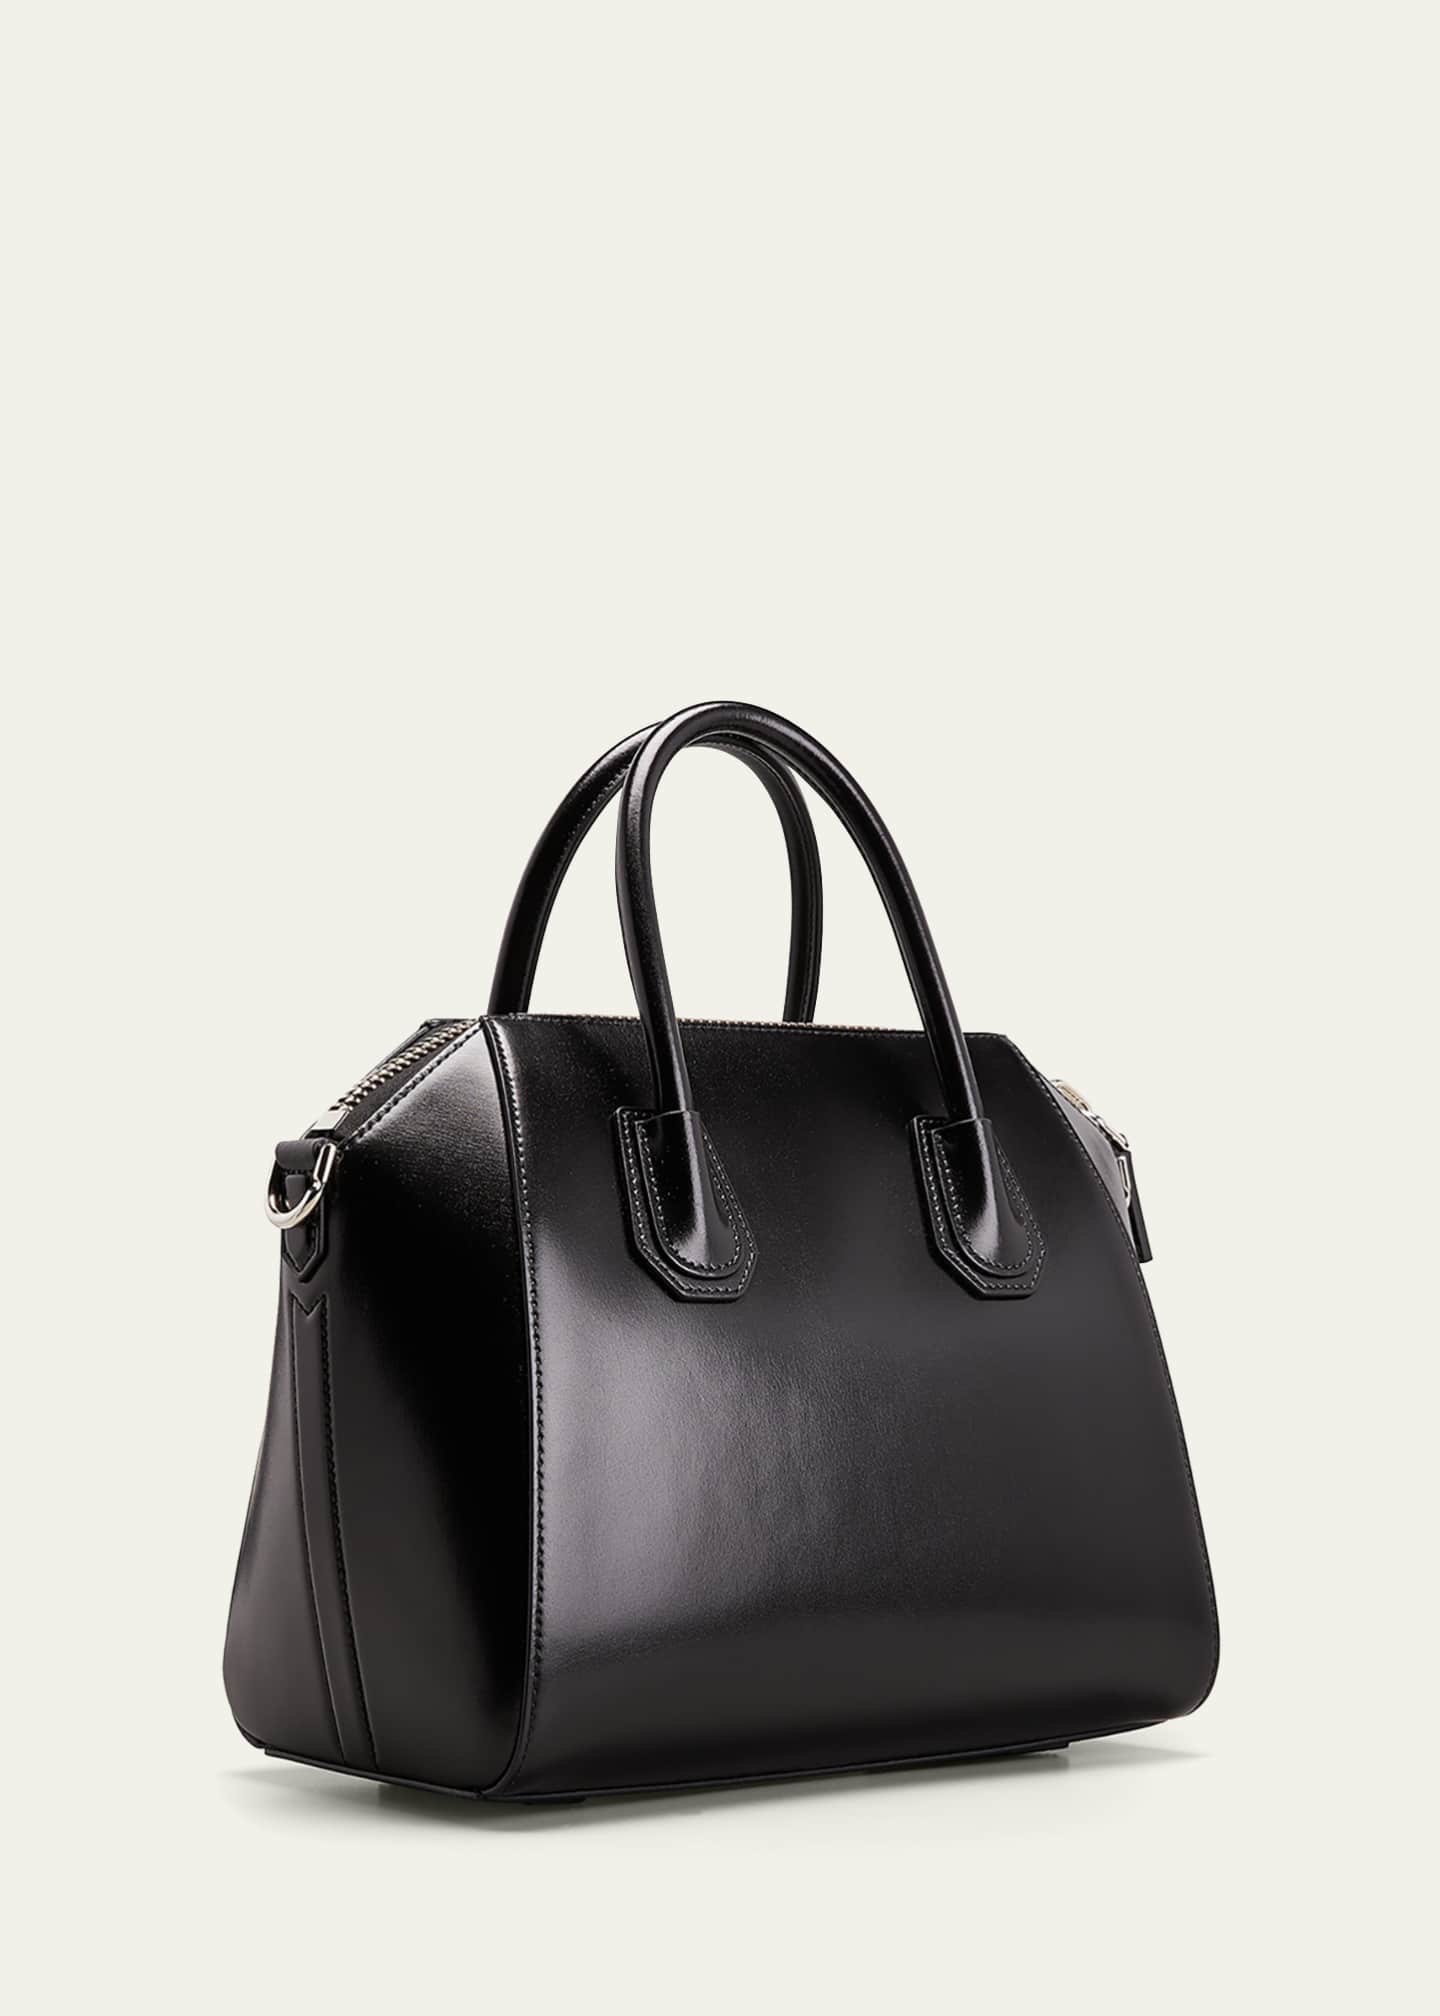 Givenchy Antigona Small Top Handle Bag in Box Leather - Bergdorf Goodman